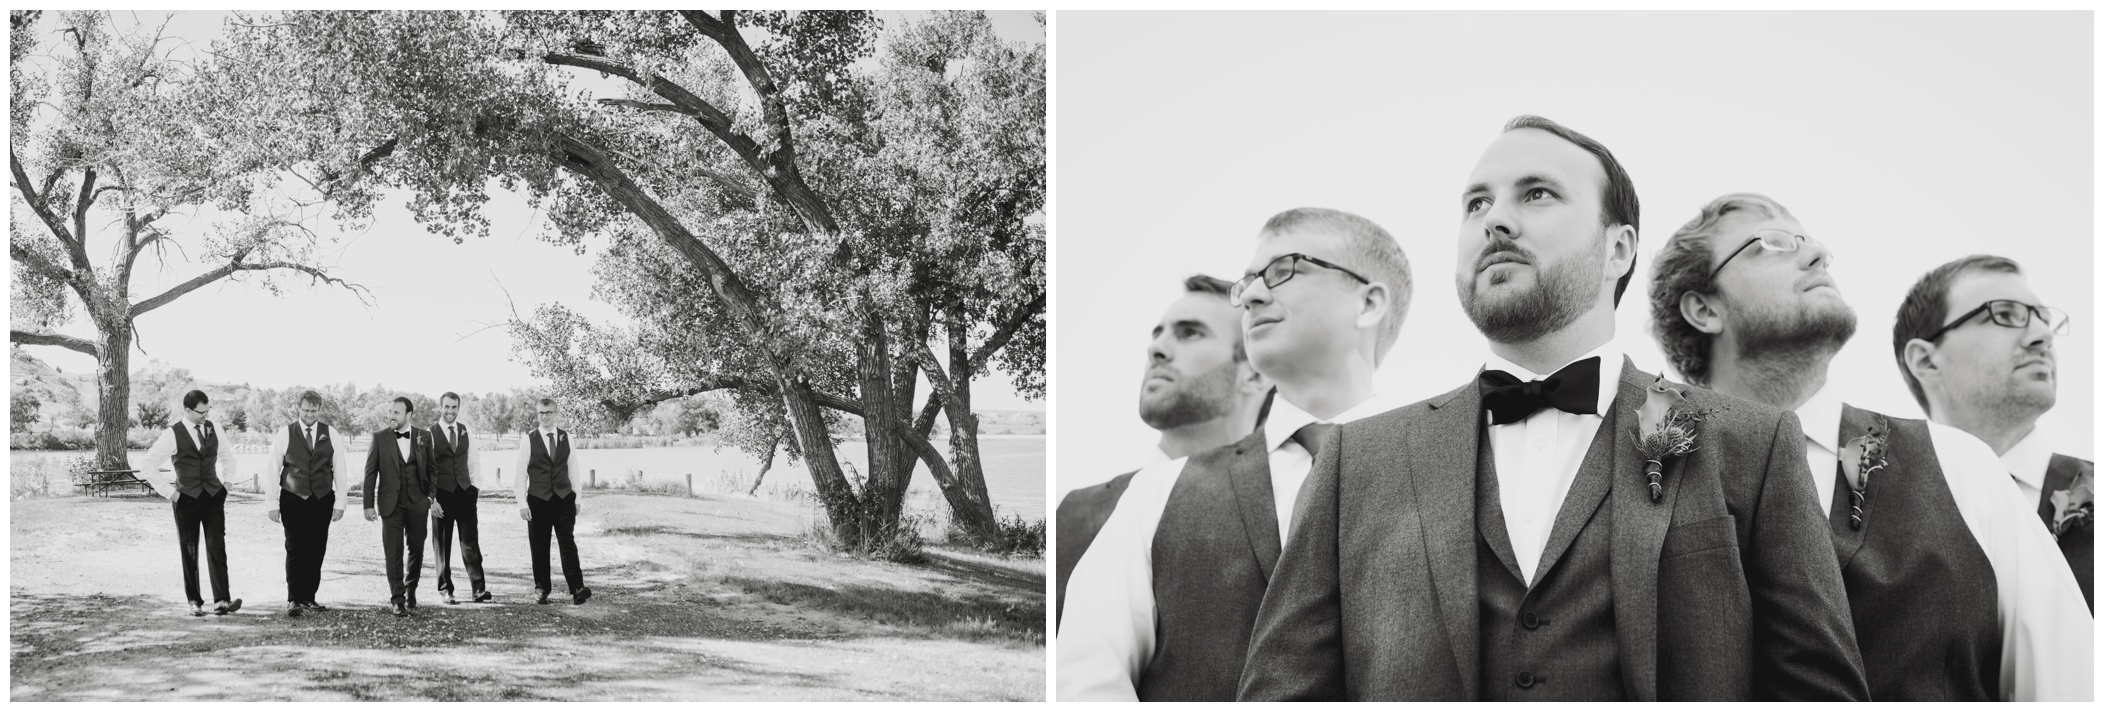 Kansas groom and groomsmen in gray